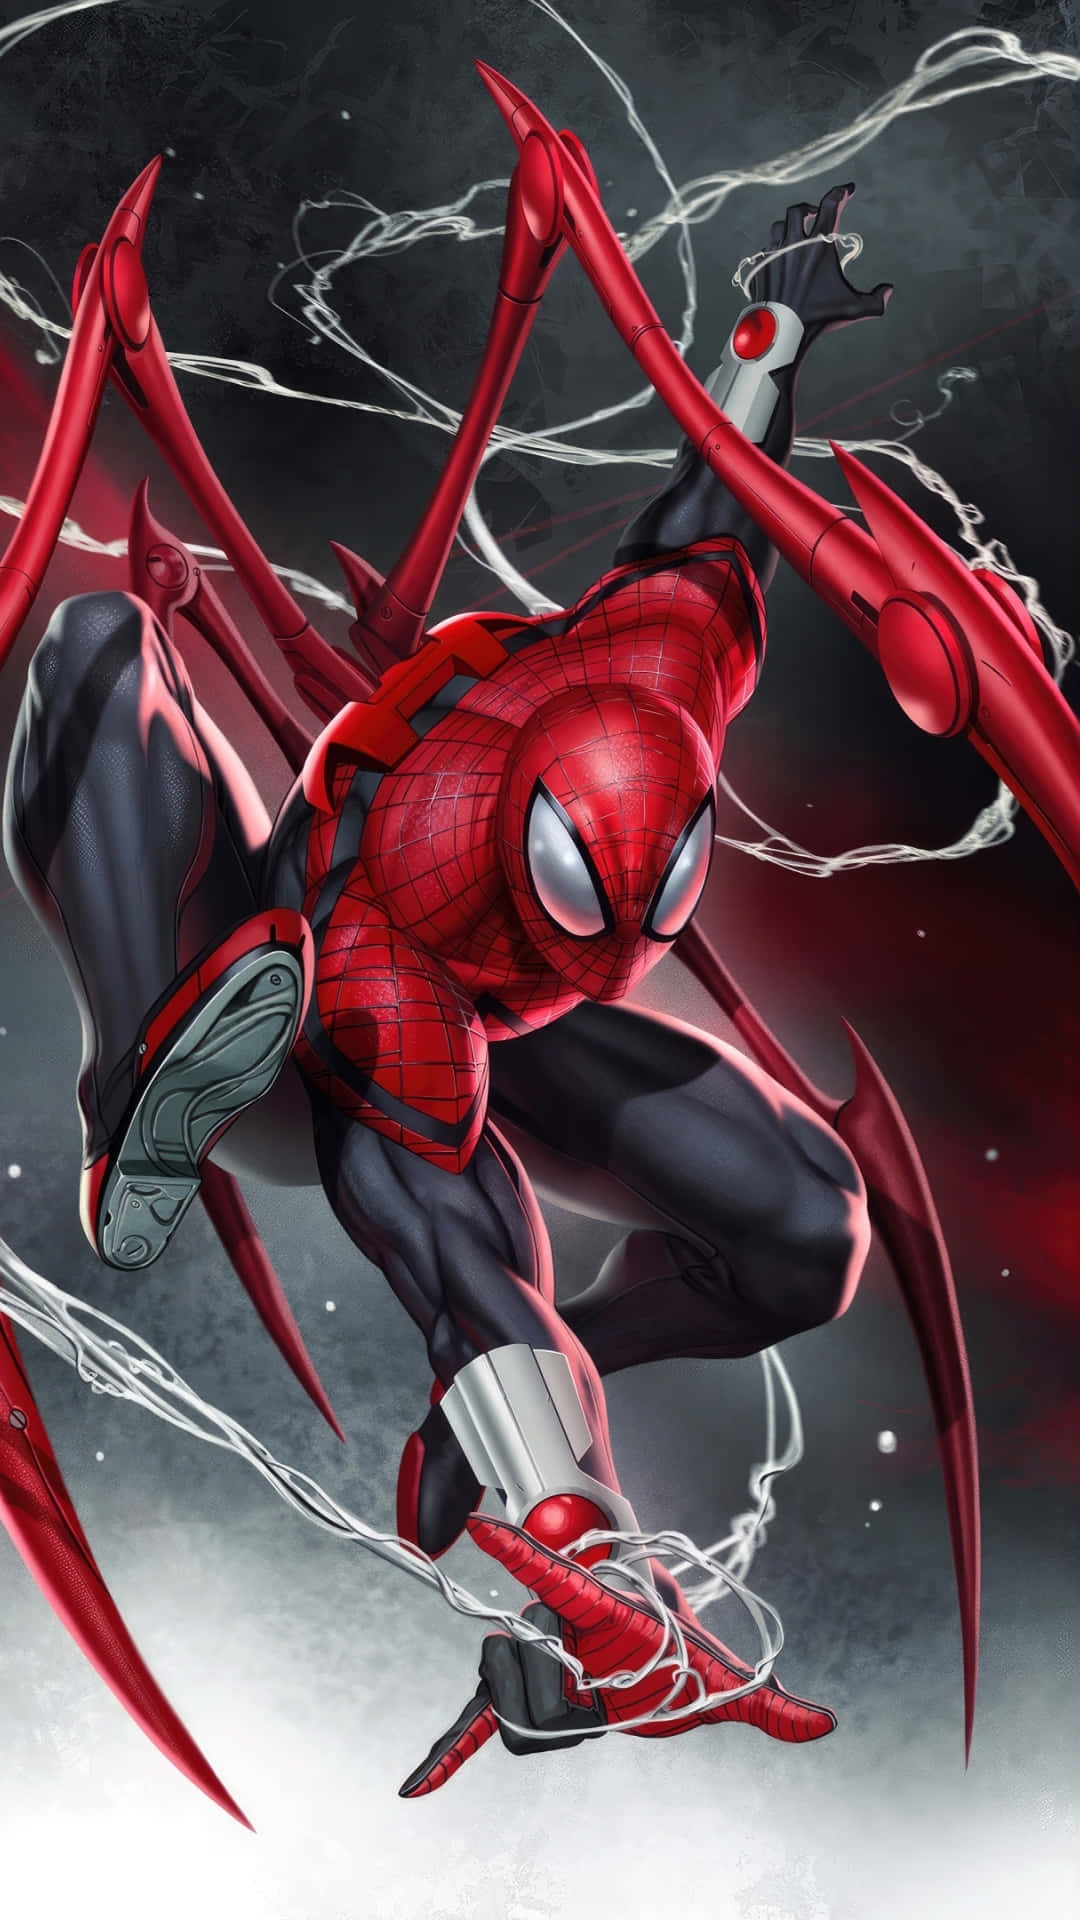 Red Armored Spider Hero Artwork Wallpaper